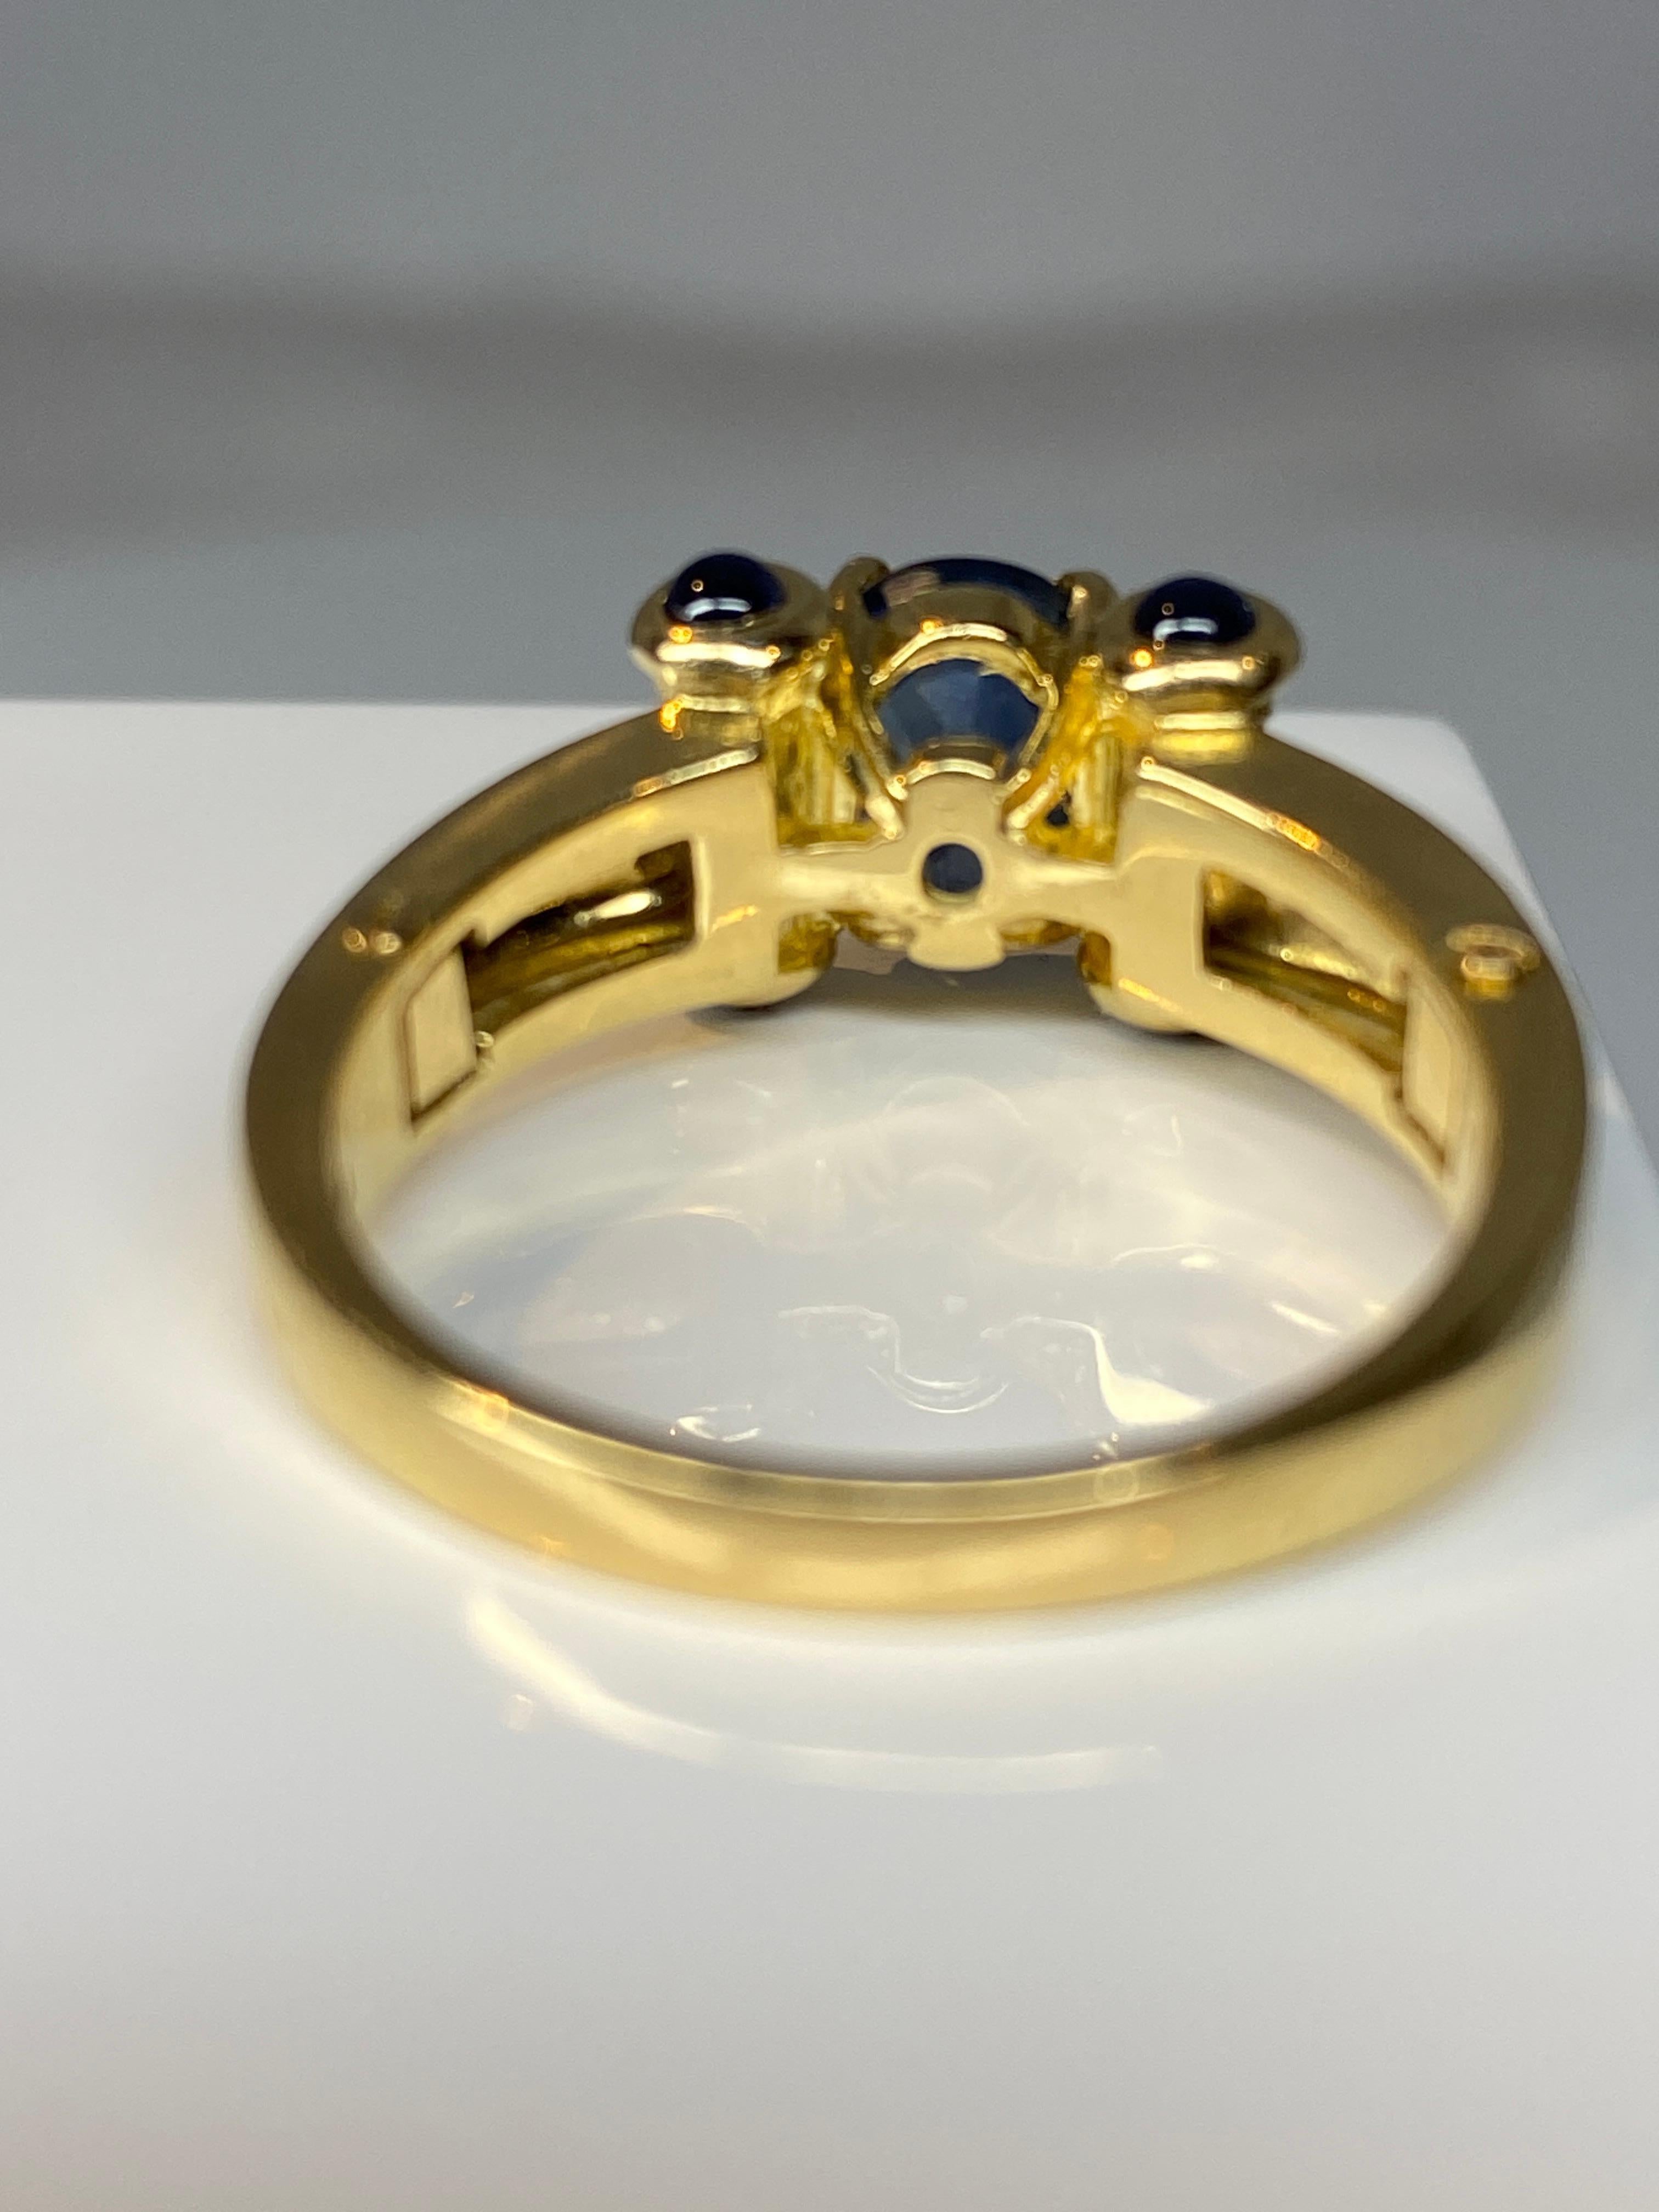 Korloff Ring in 18 Carat Gold: Sapphires, Diamonds, Blue Enamel In Good Condition For Sale In VERSAILLES, FR